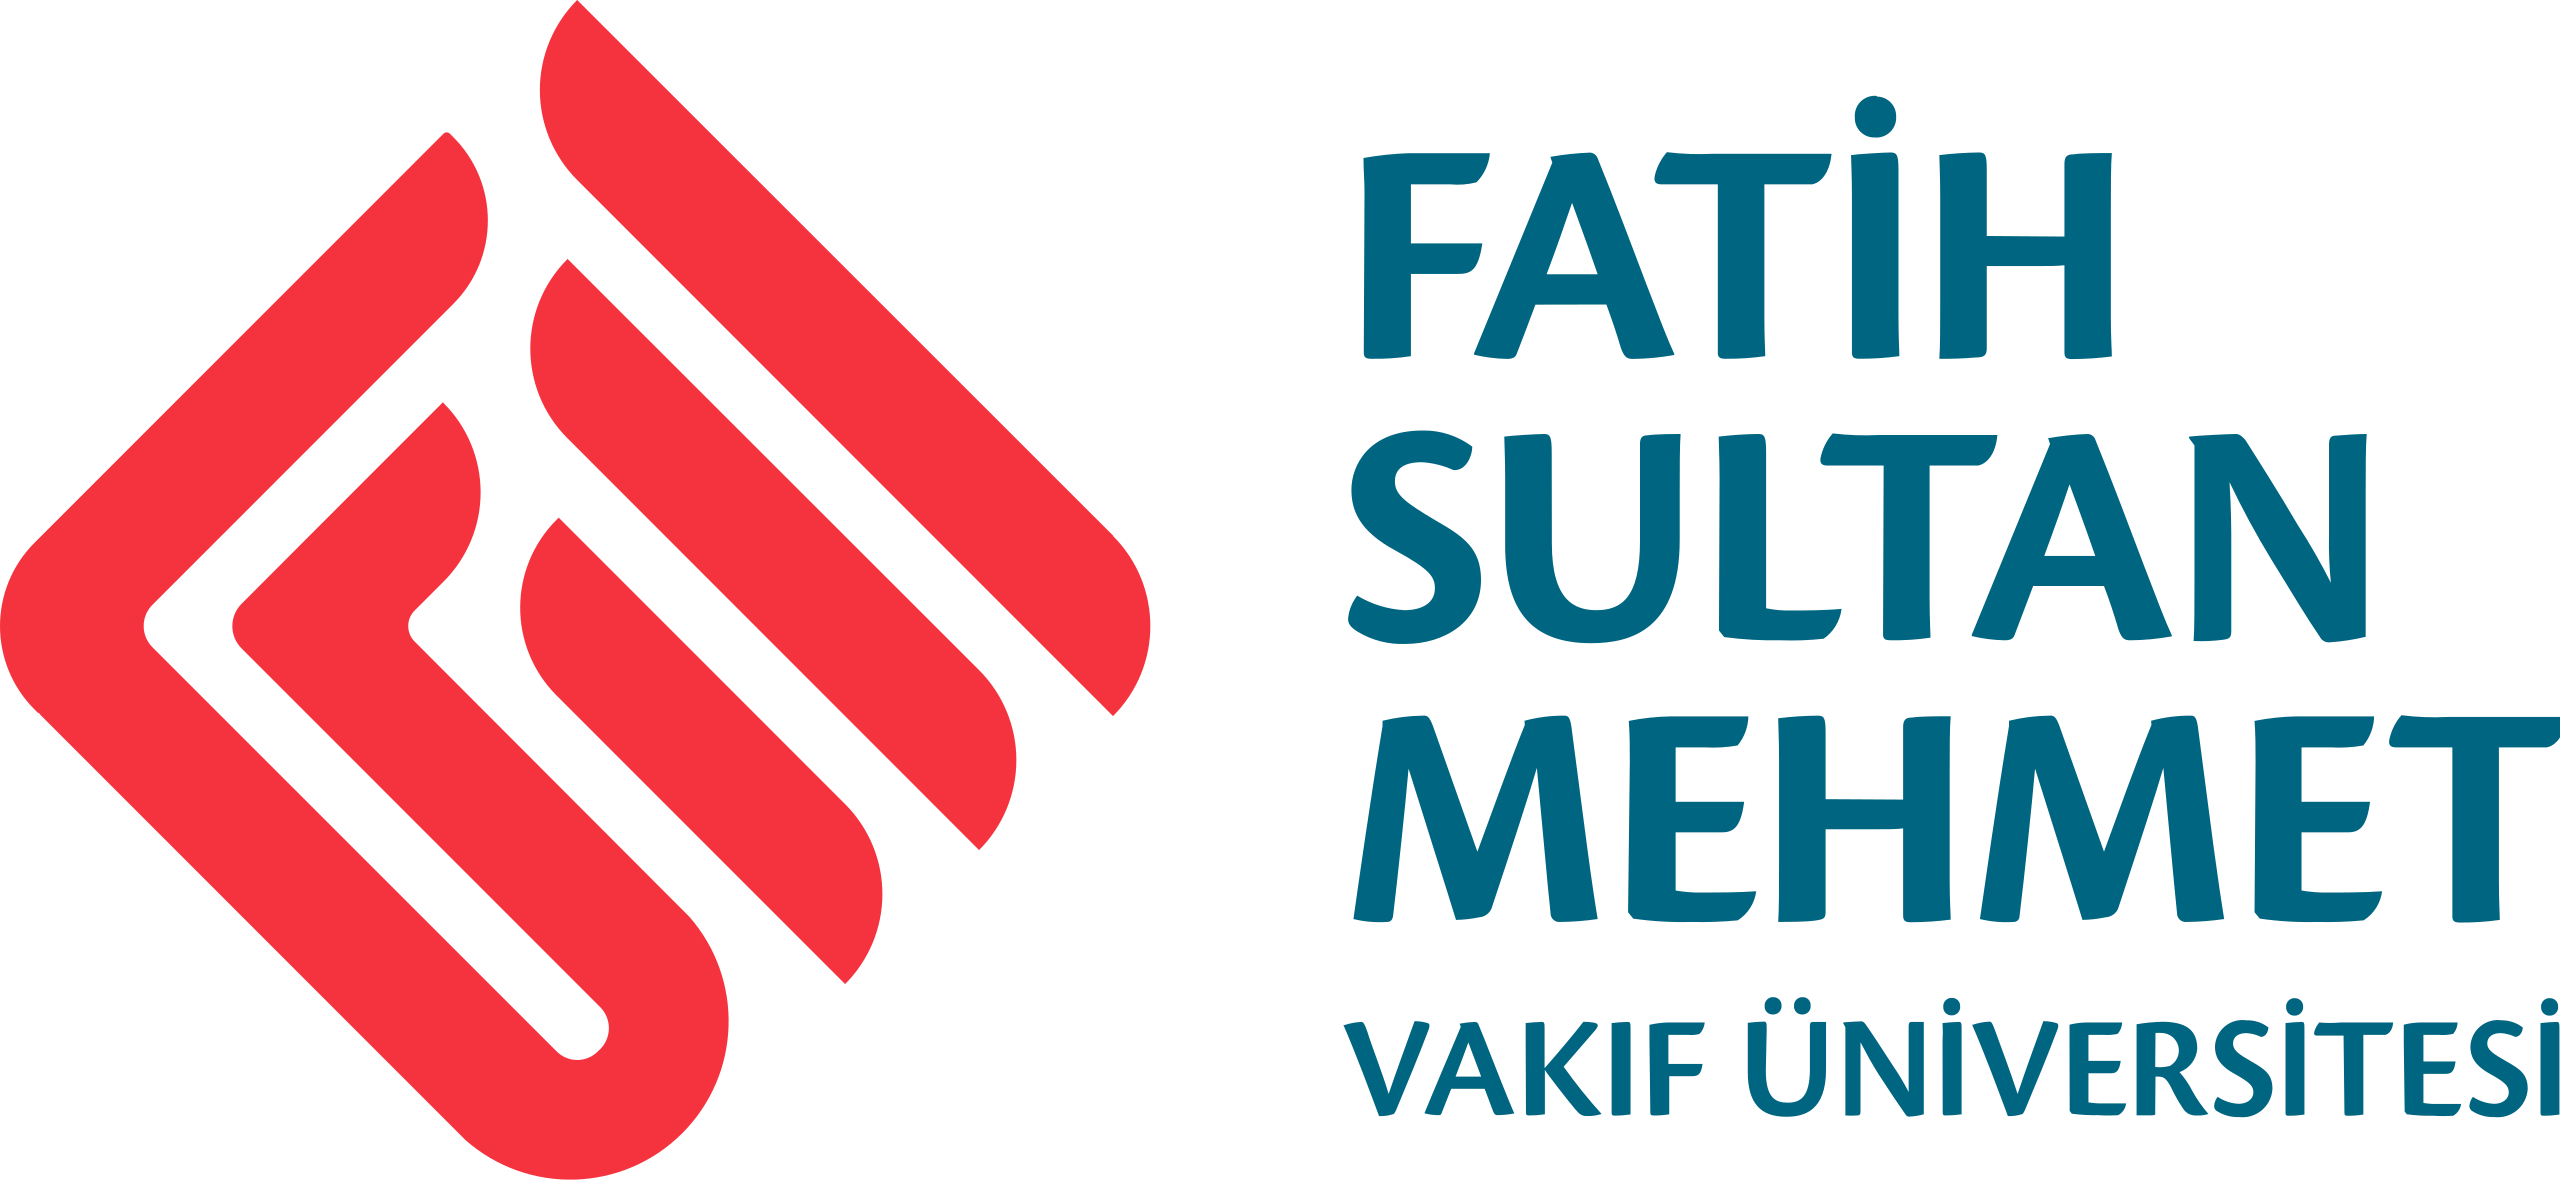 Fatih_Sultan_Mehmet_University_logo.svg (1)